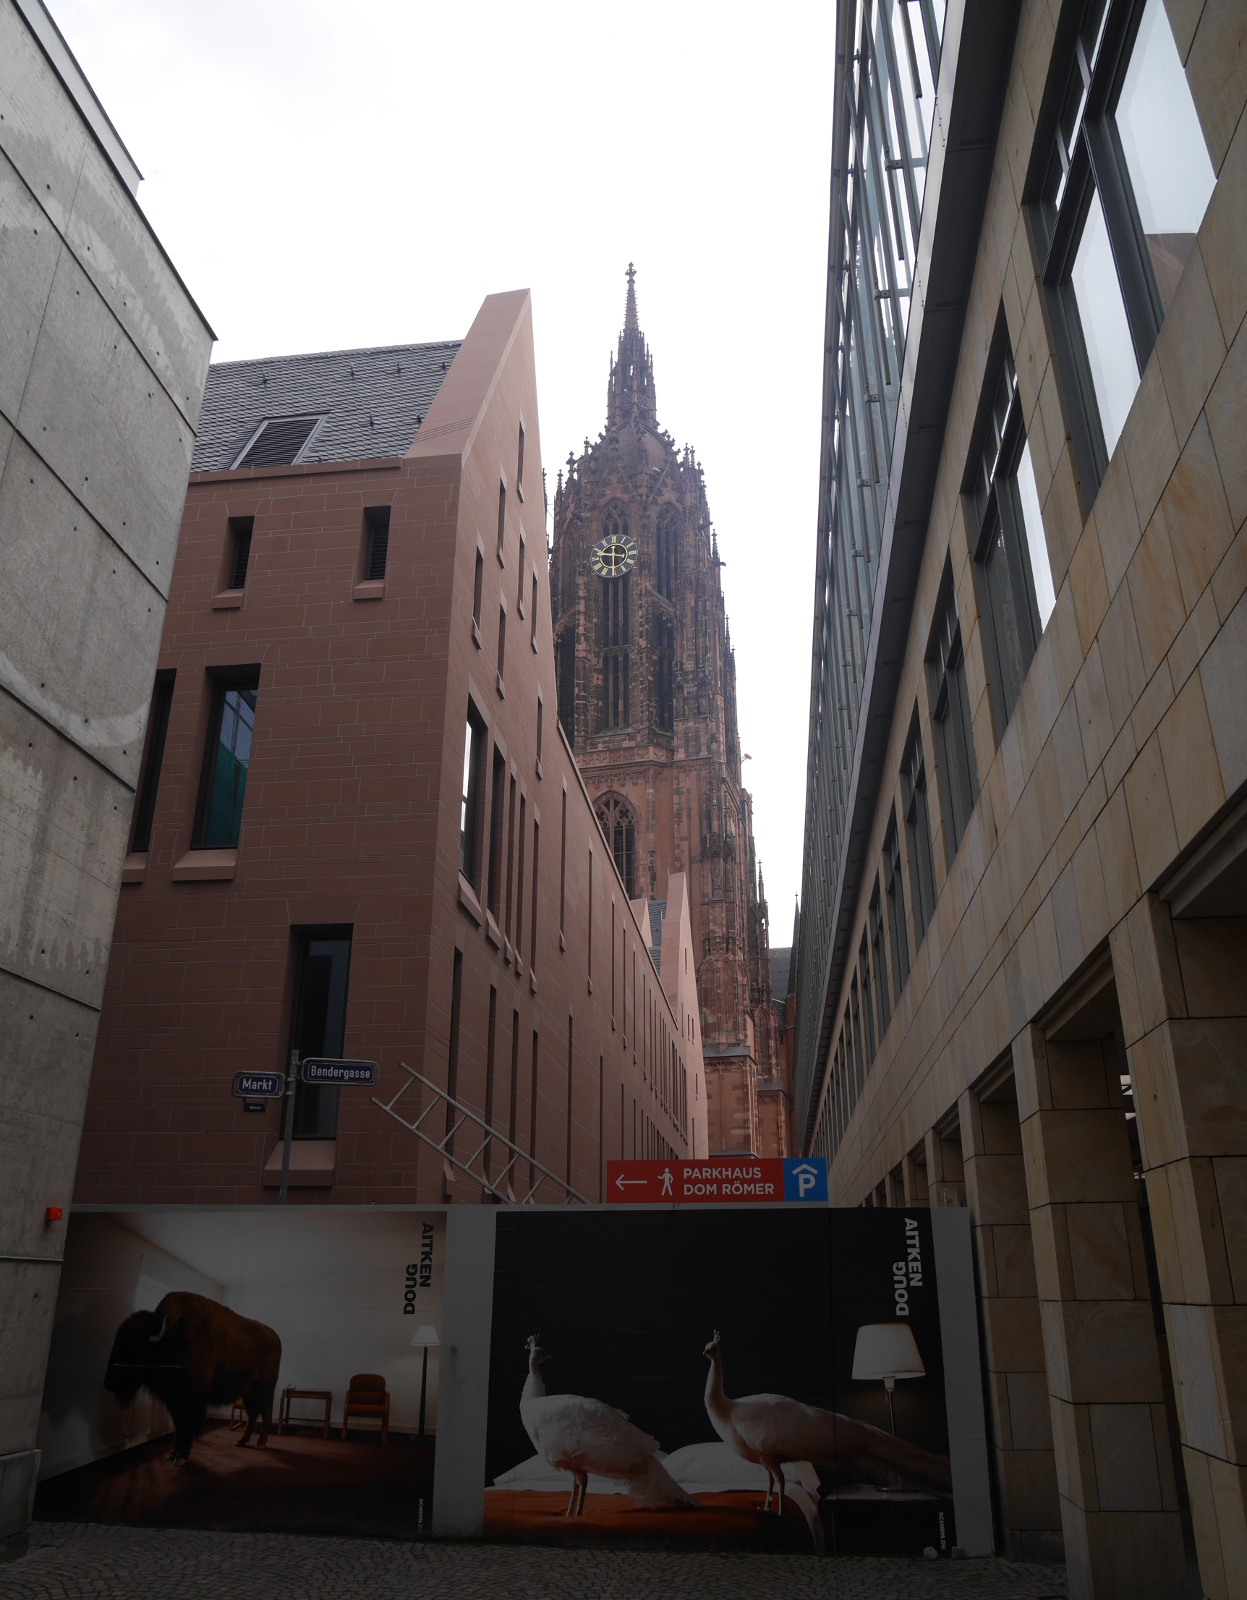 Glimpse of the Frankfurter Dom between newer buildings, as seen in 2015.